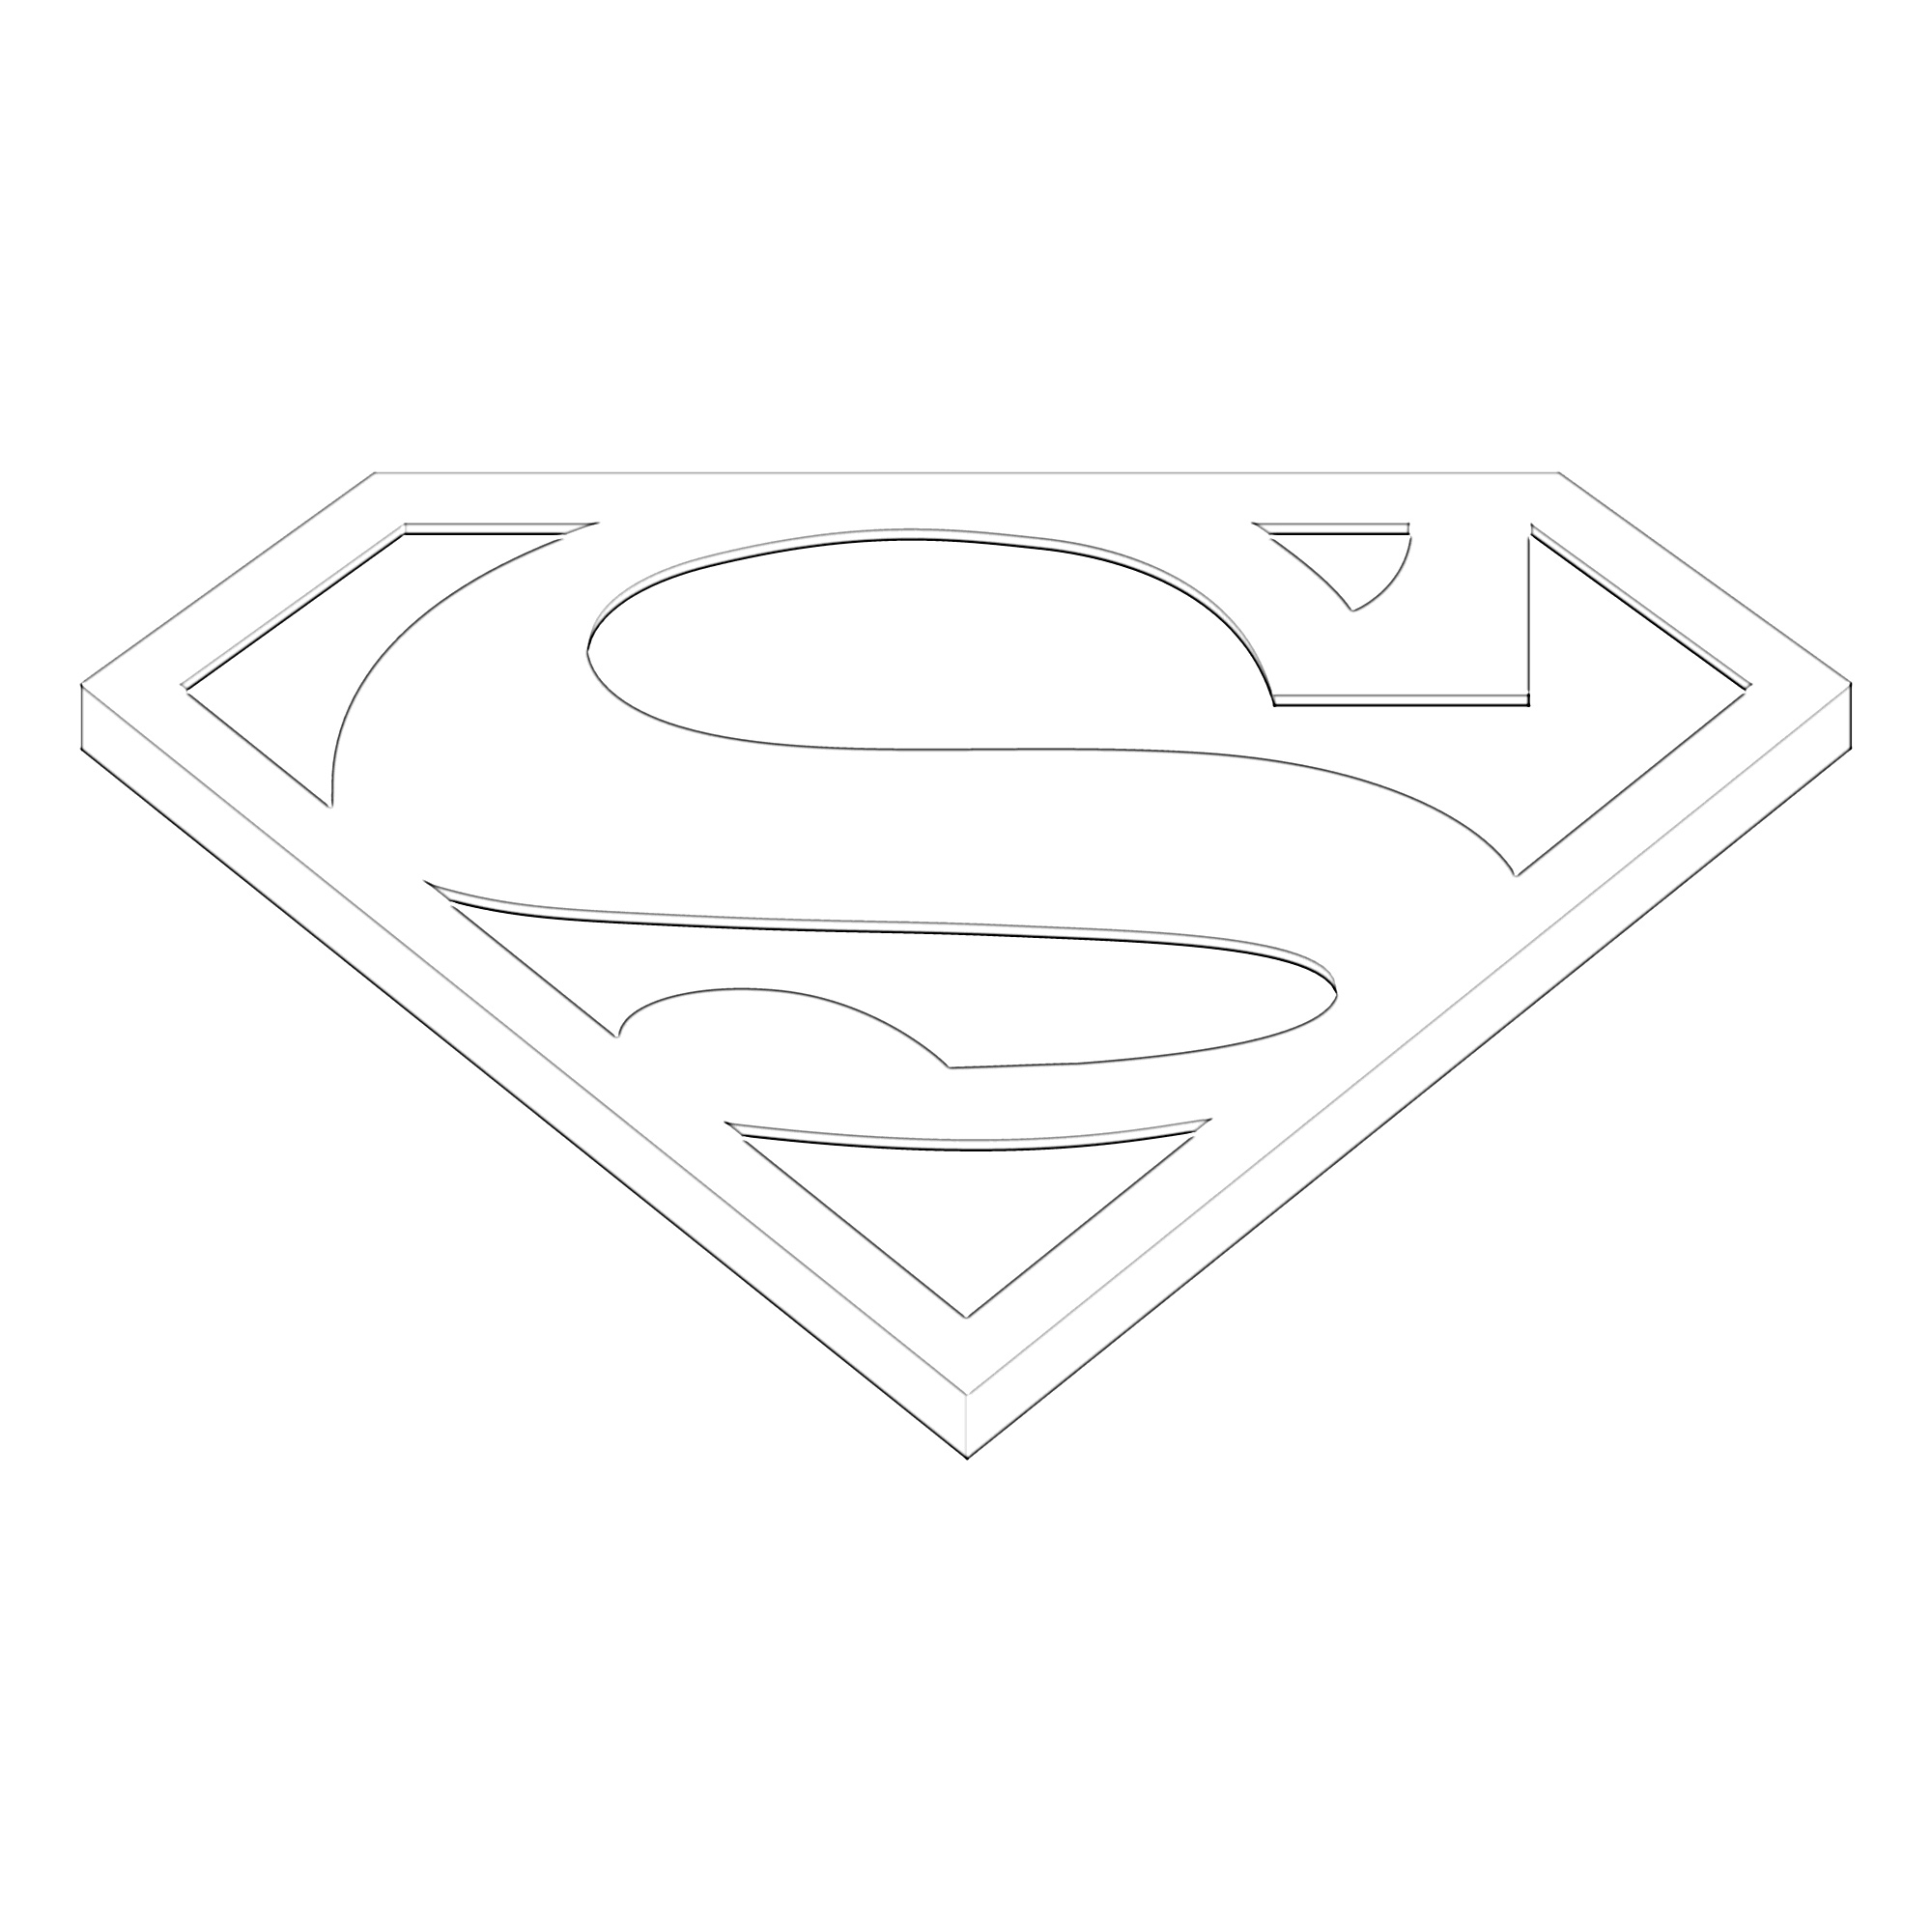 Superman symbol coloring page